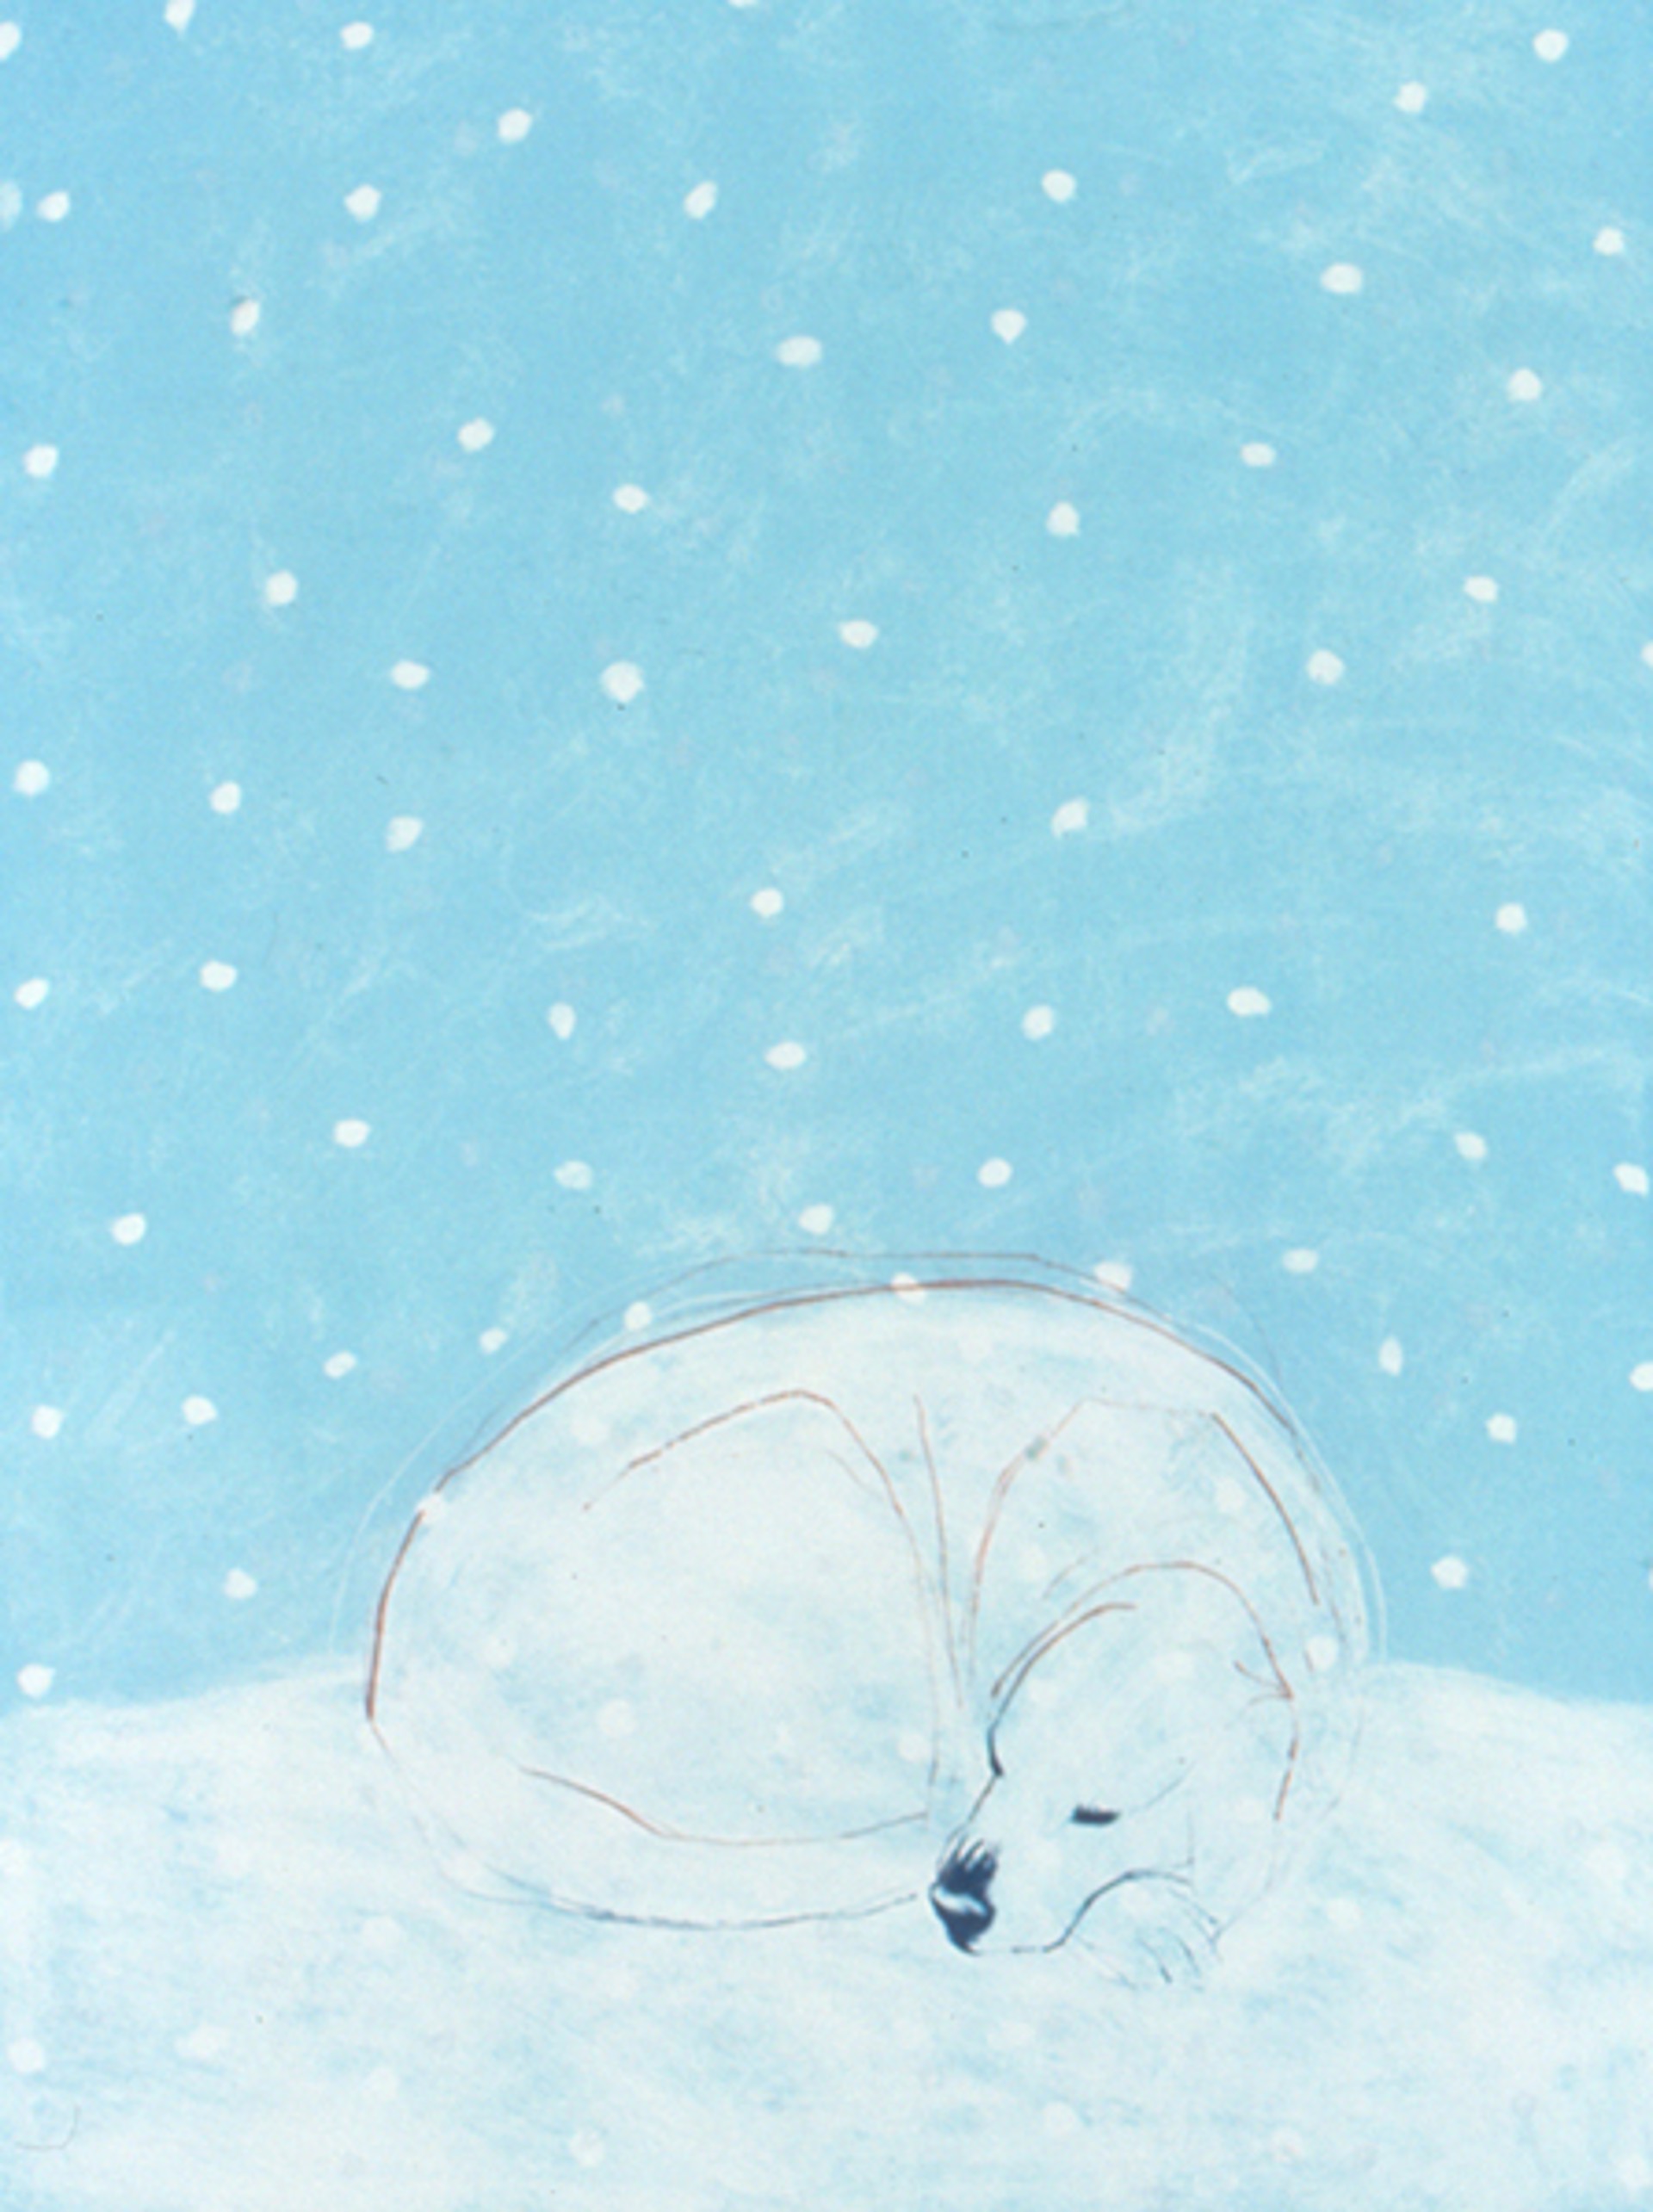 Sleeping in the Snow by Paula Schuette Kraemer